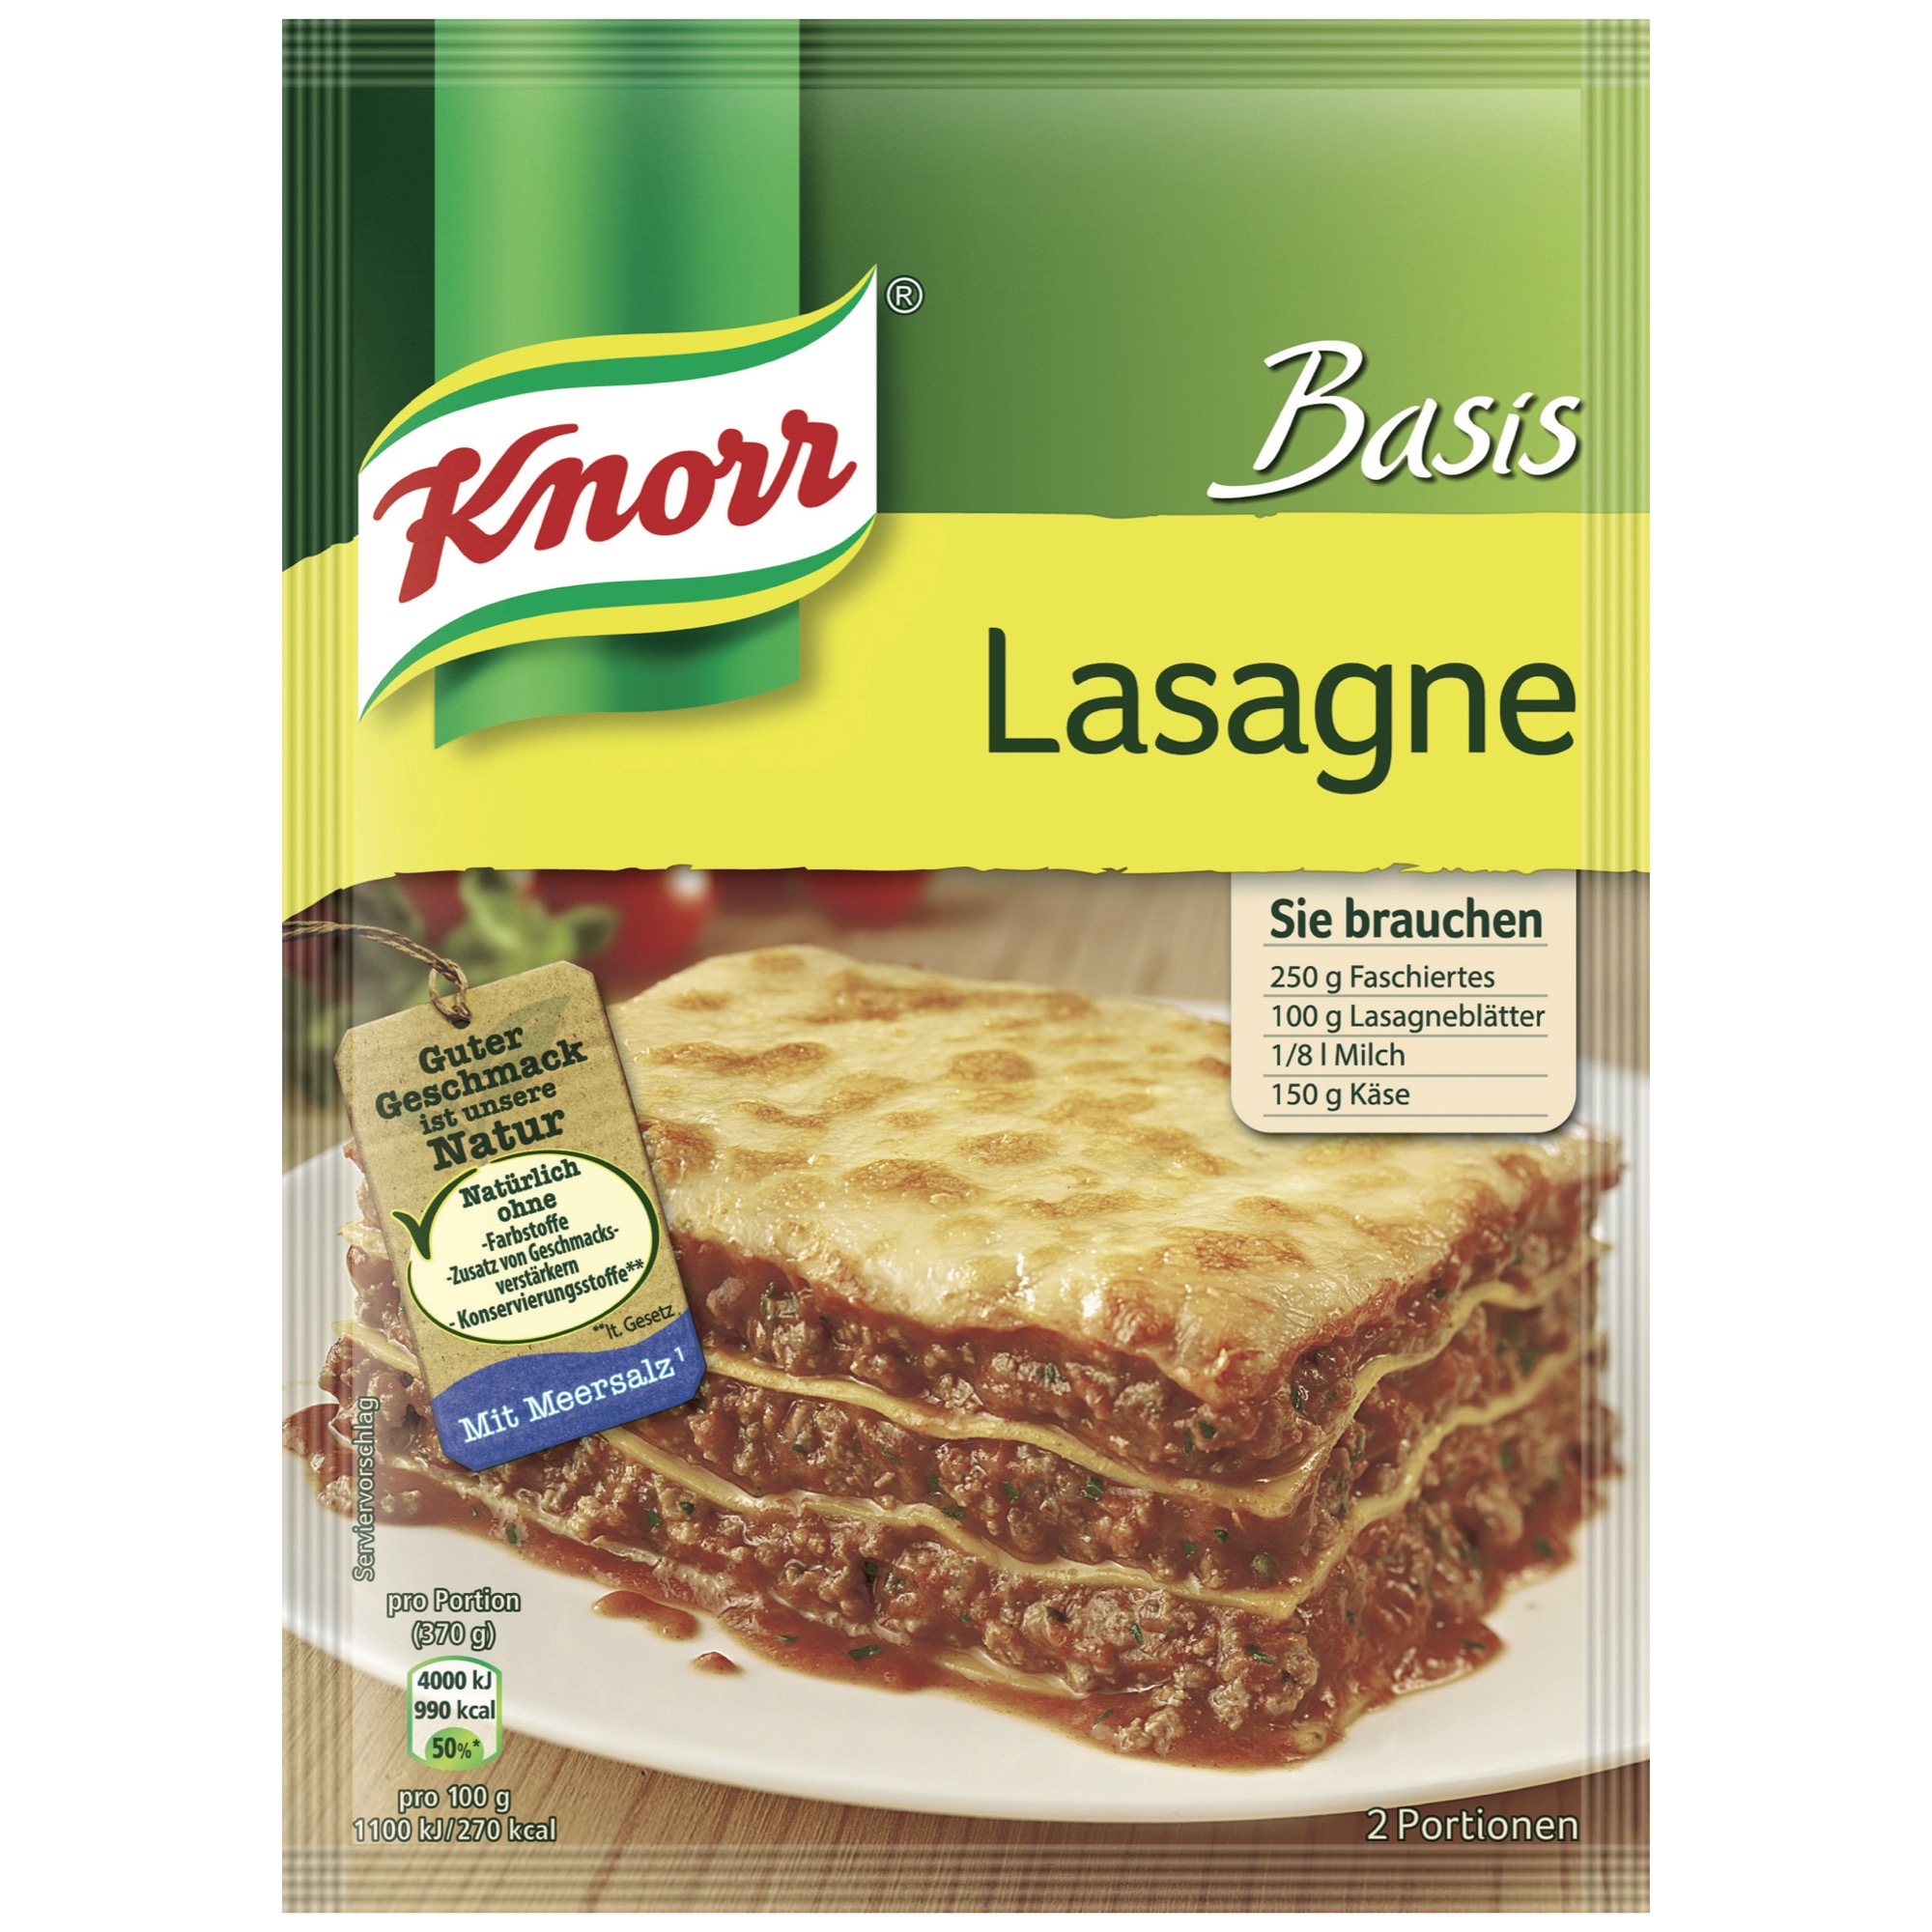 Knorr Basis lasagne